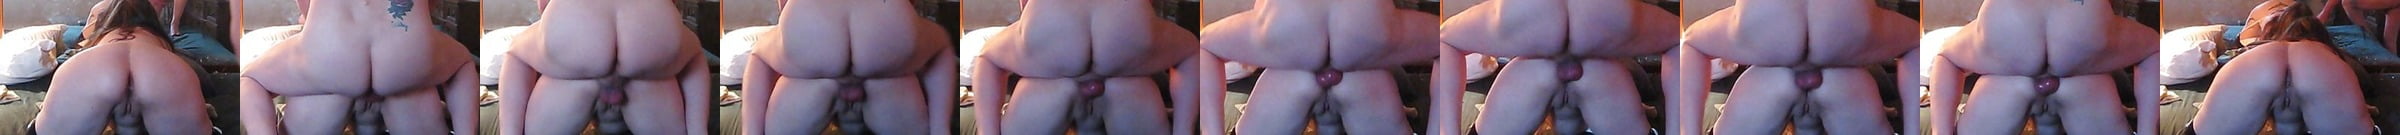 Ass Close Up ポルノビデオ Xhamster